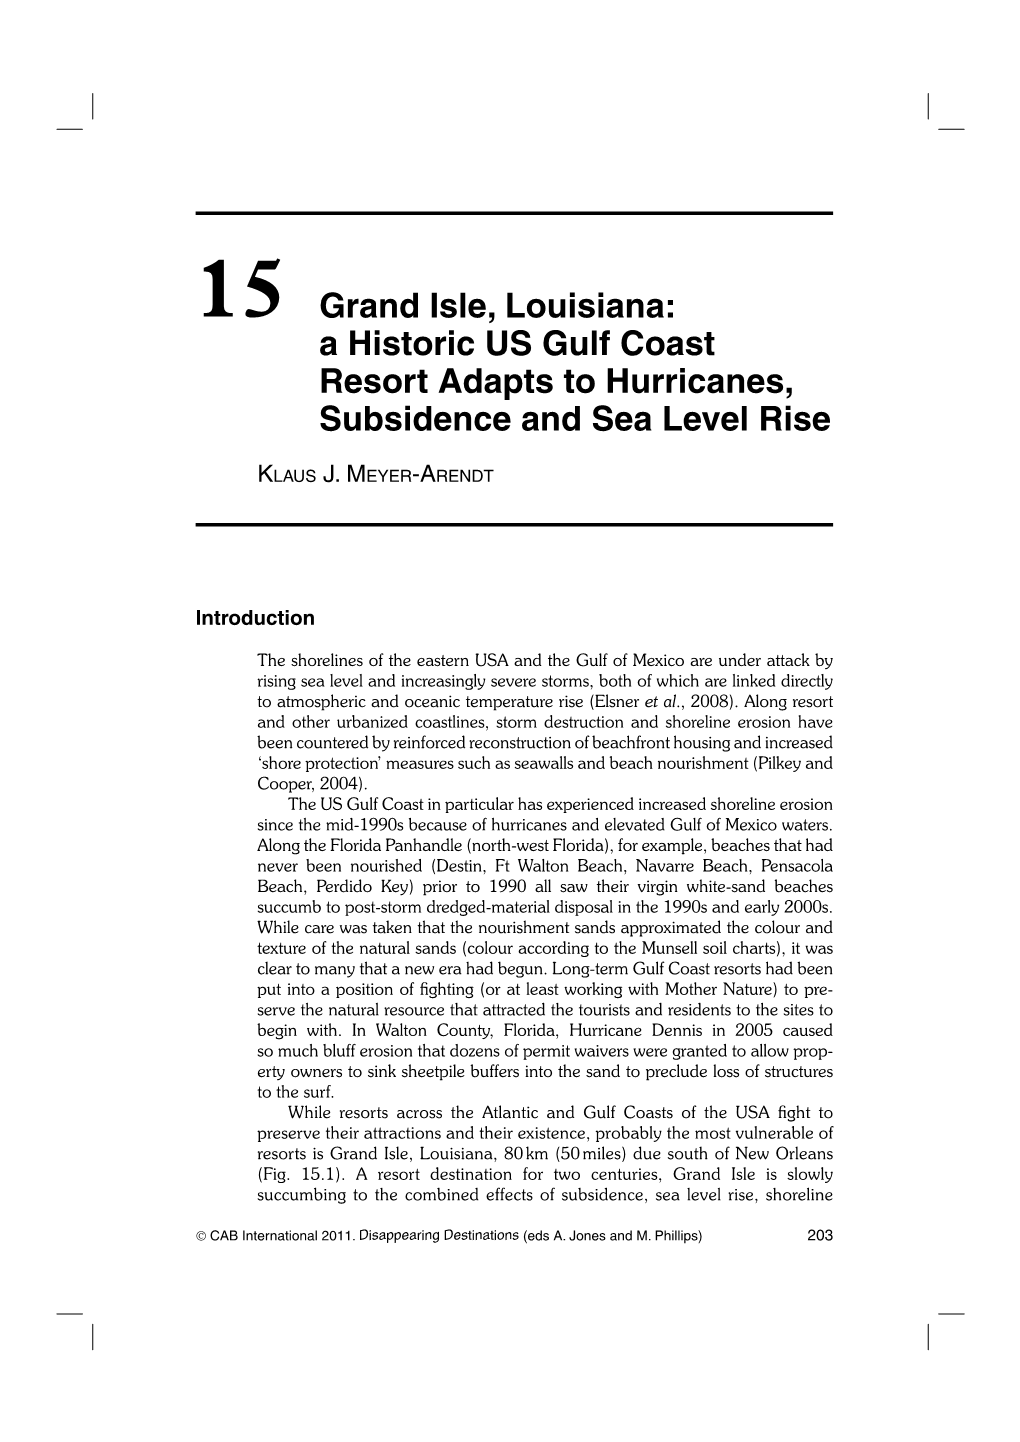 15 Grand Isle, Louisiana: a Historic US Gulf Coast Resort Adapts to Hurricanes, Subsidence and Sea Level Rise